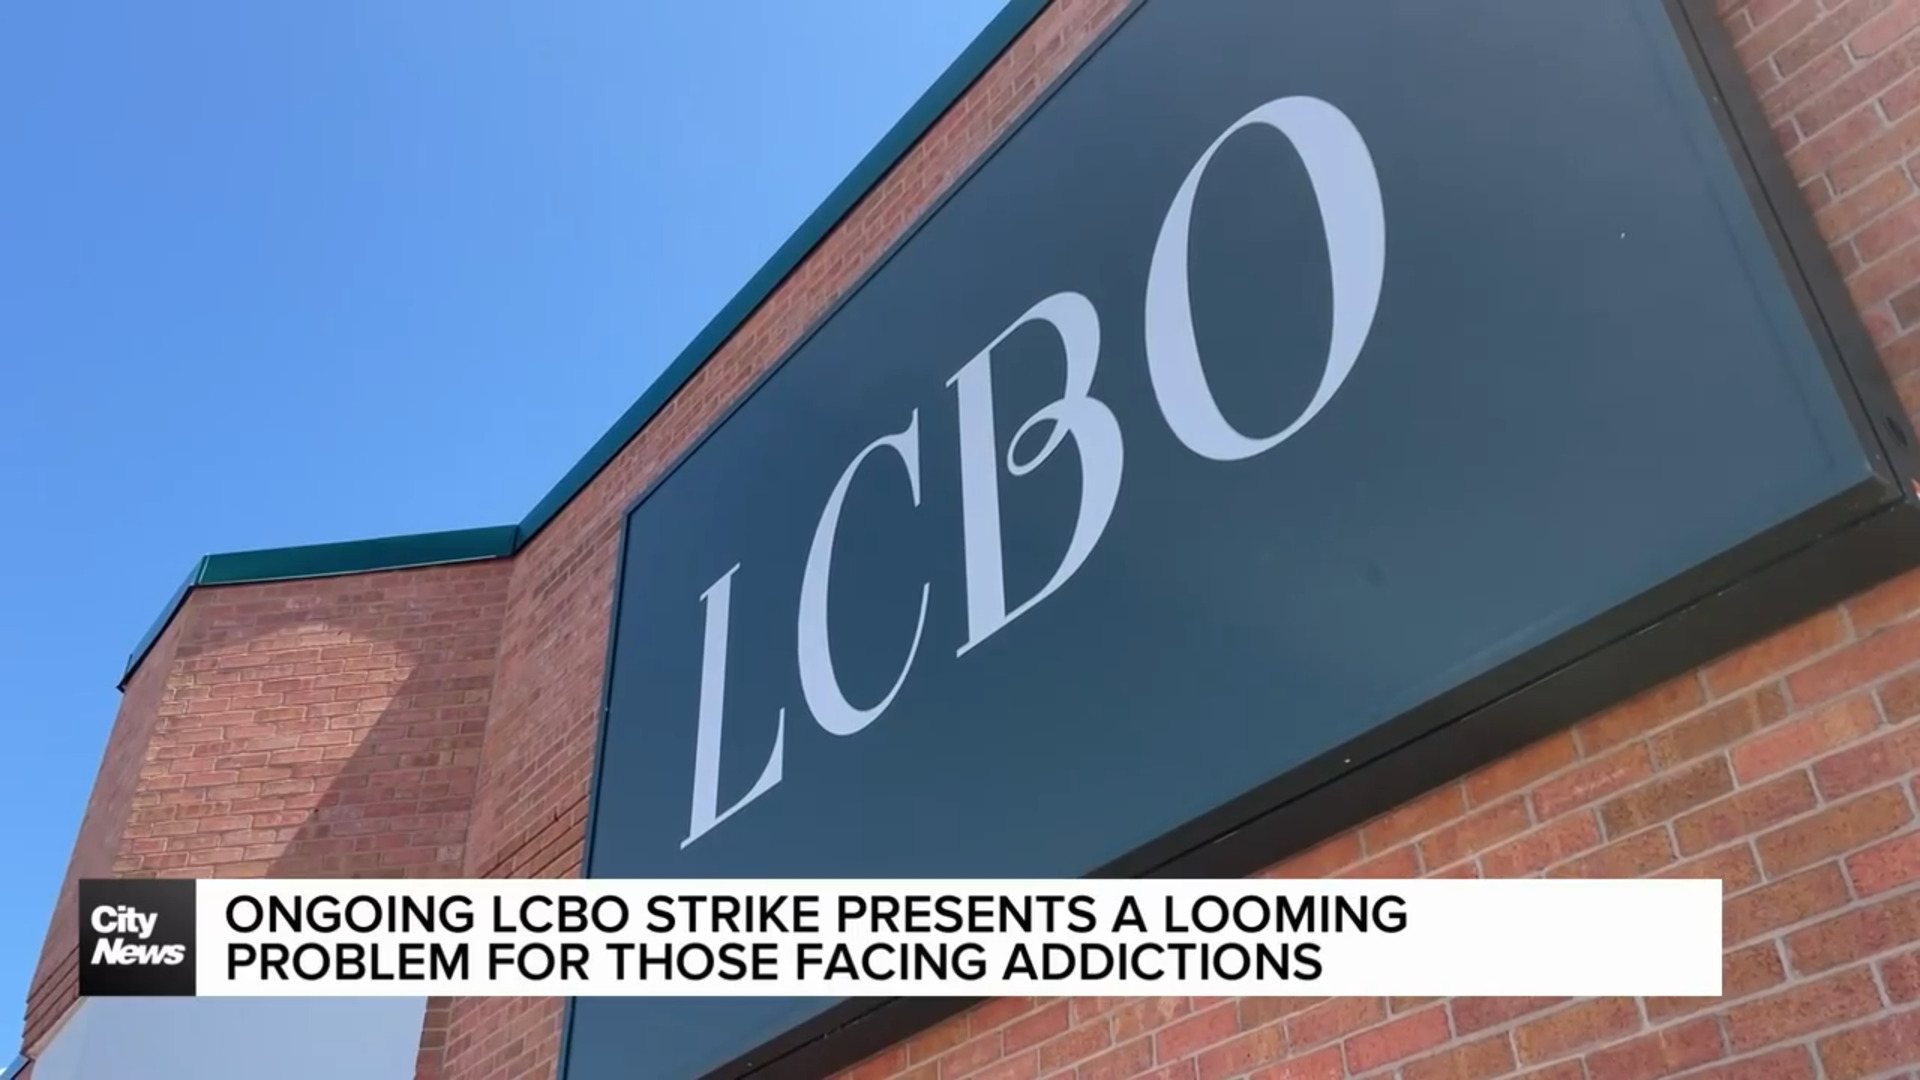 LCBO strike may soon impact those facing addiction